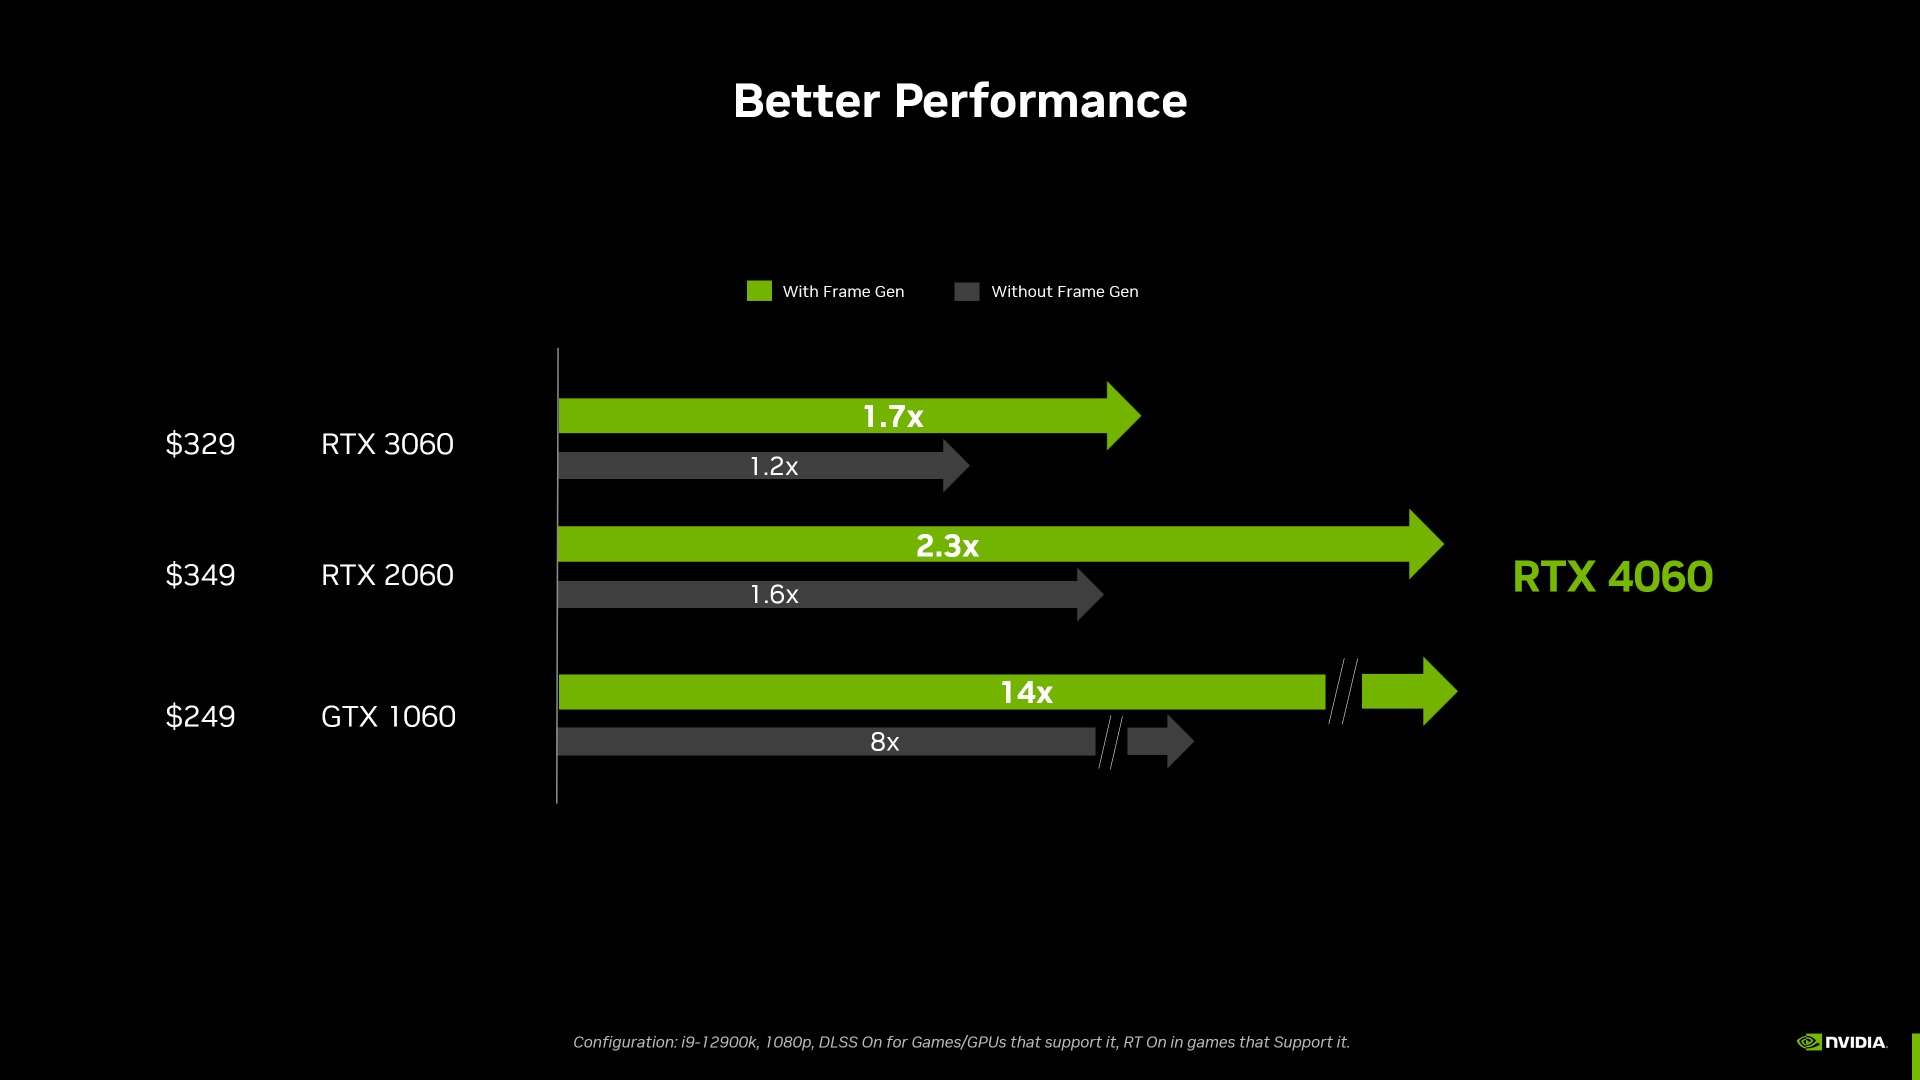 NVIDIA GeForce RTX 4060 Ti vs 3060 Ti - Generational Leap No More